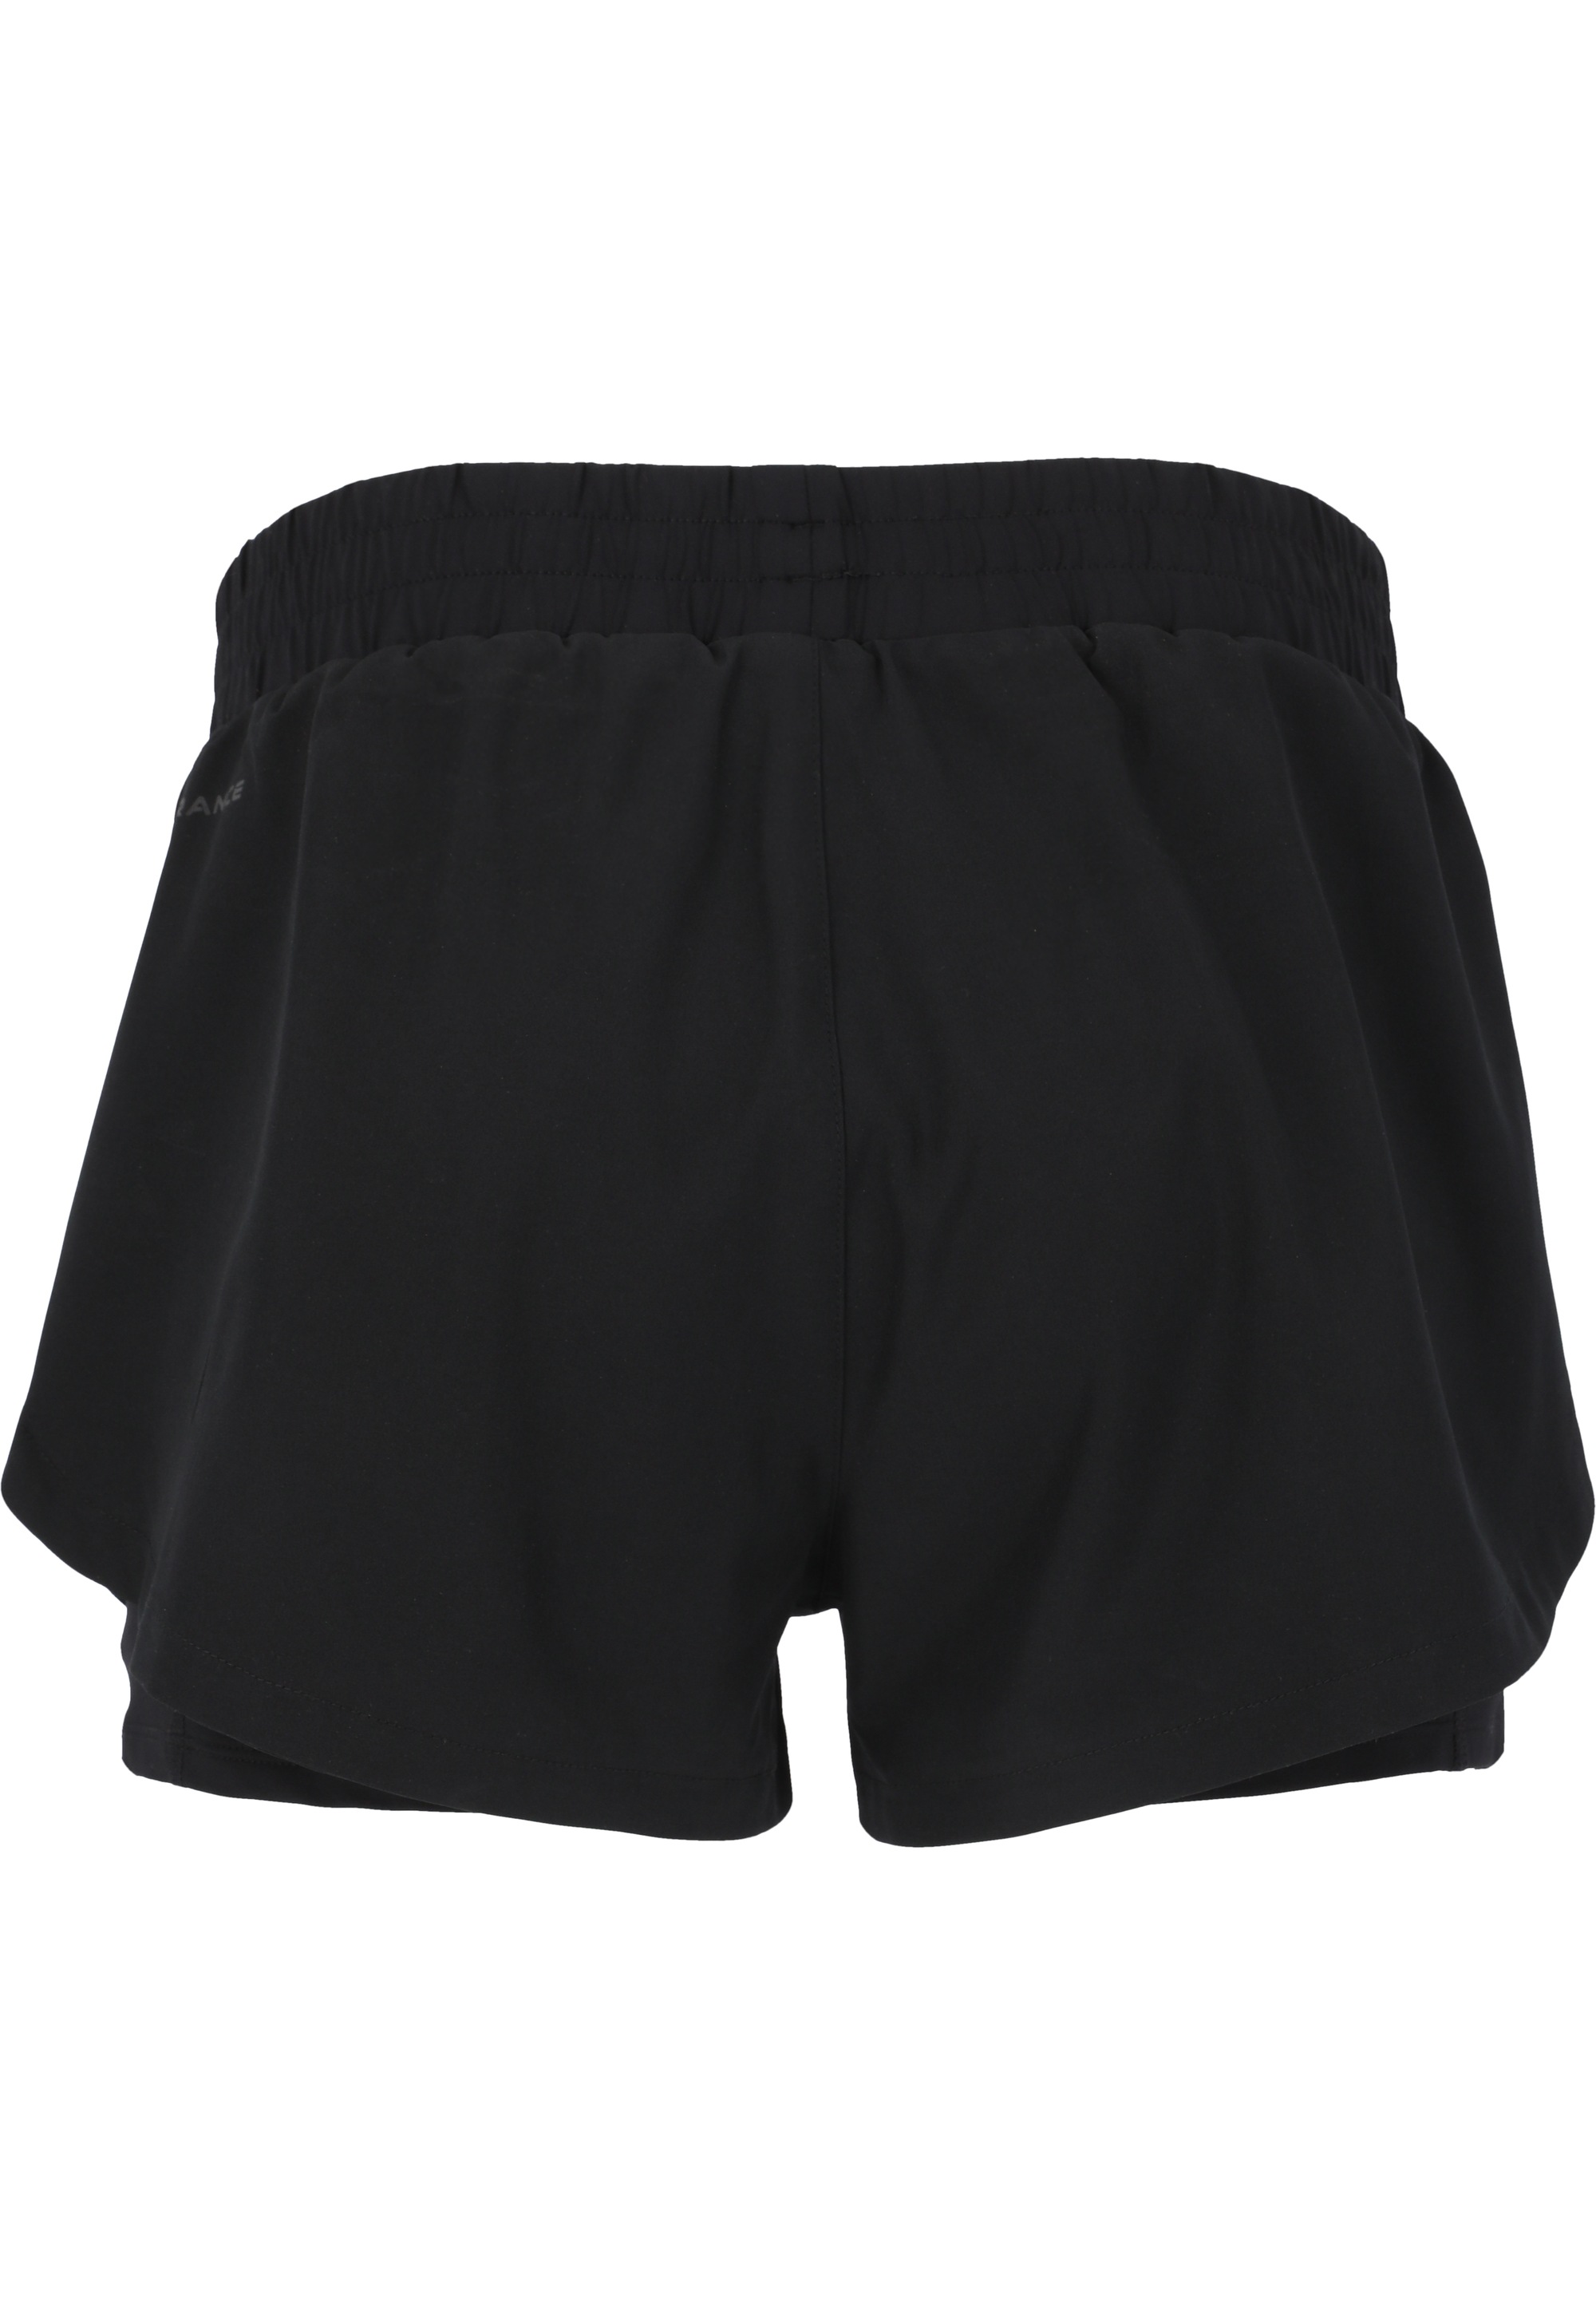 ENDURANCE Shorts »Yarol«, mit praktischer 2-in-1-Funktion shoppen | Trainingshosen